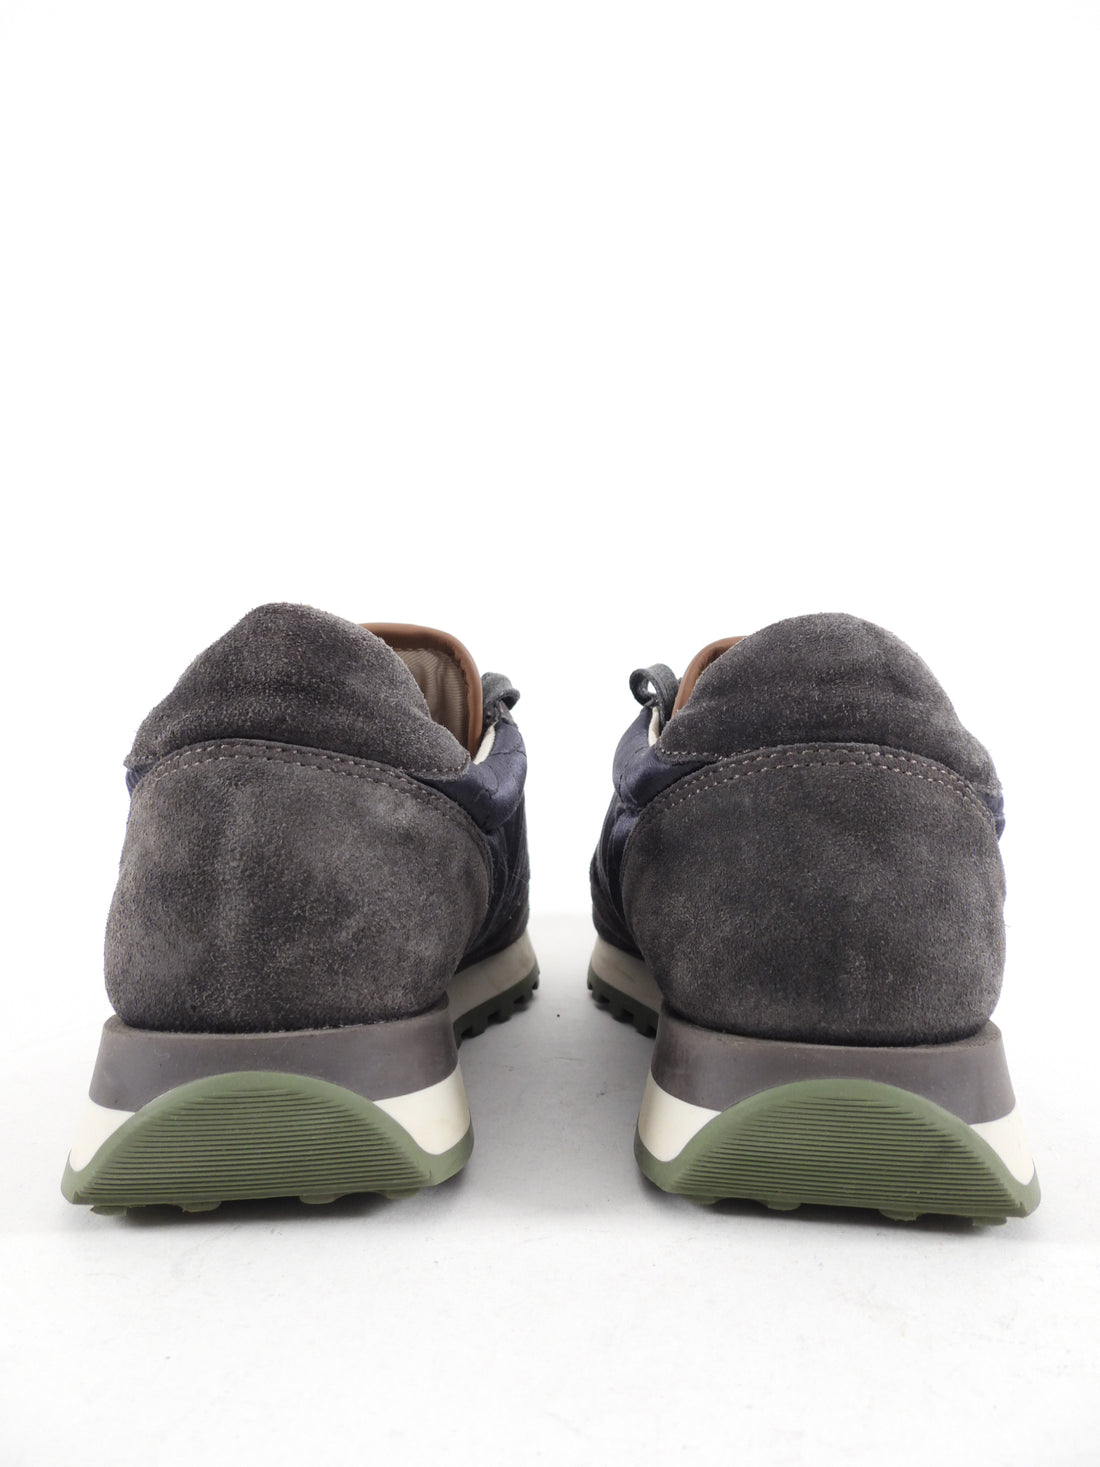 Brunello Cucinelli Grey and Brown Monili Sneakers - 38 (7.5)